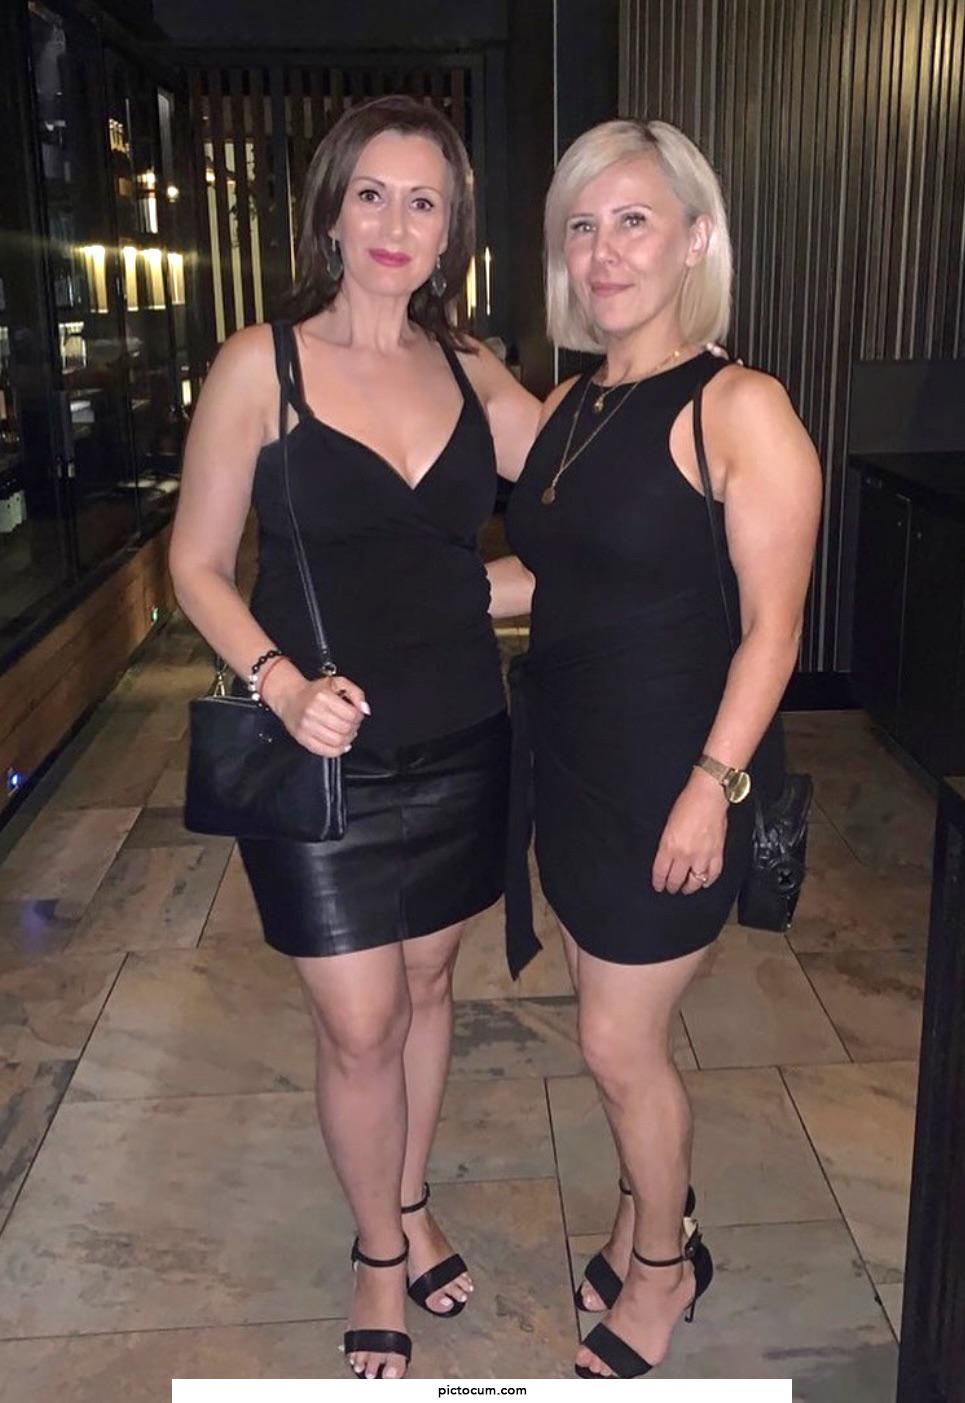 Two gorgeous ladies in black